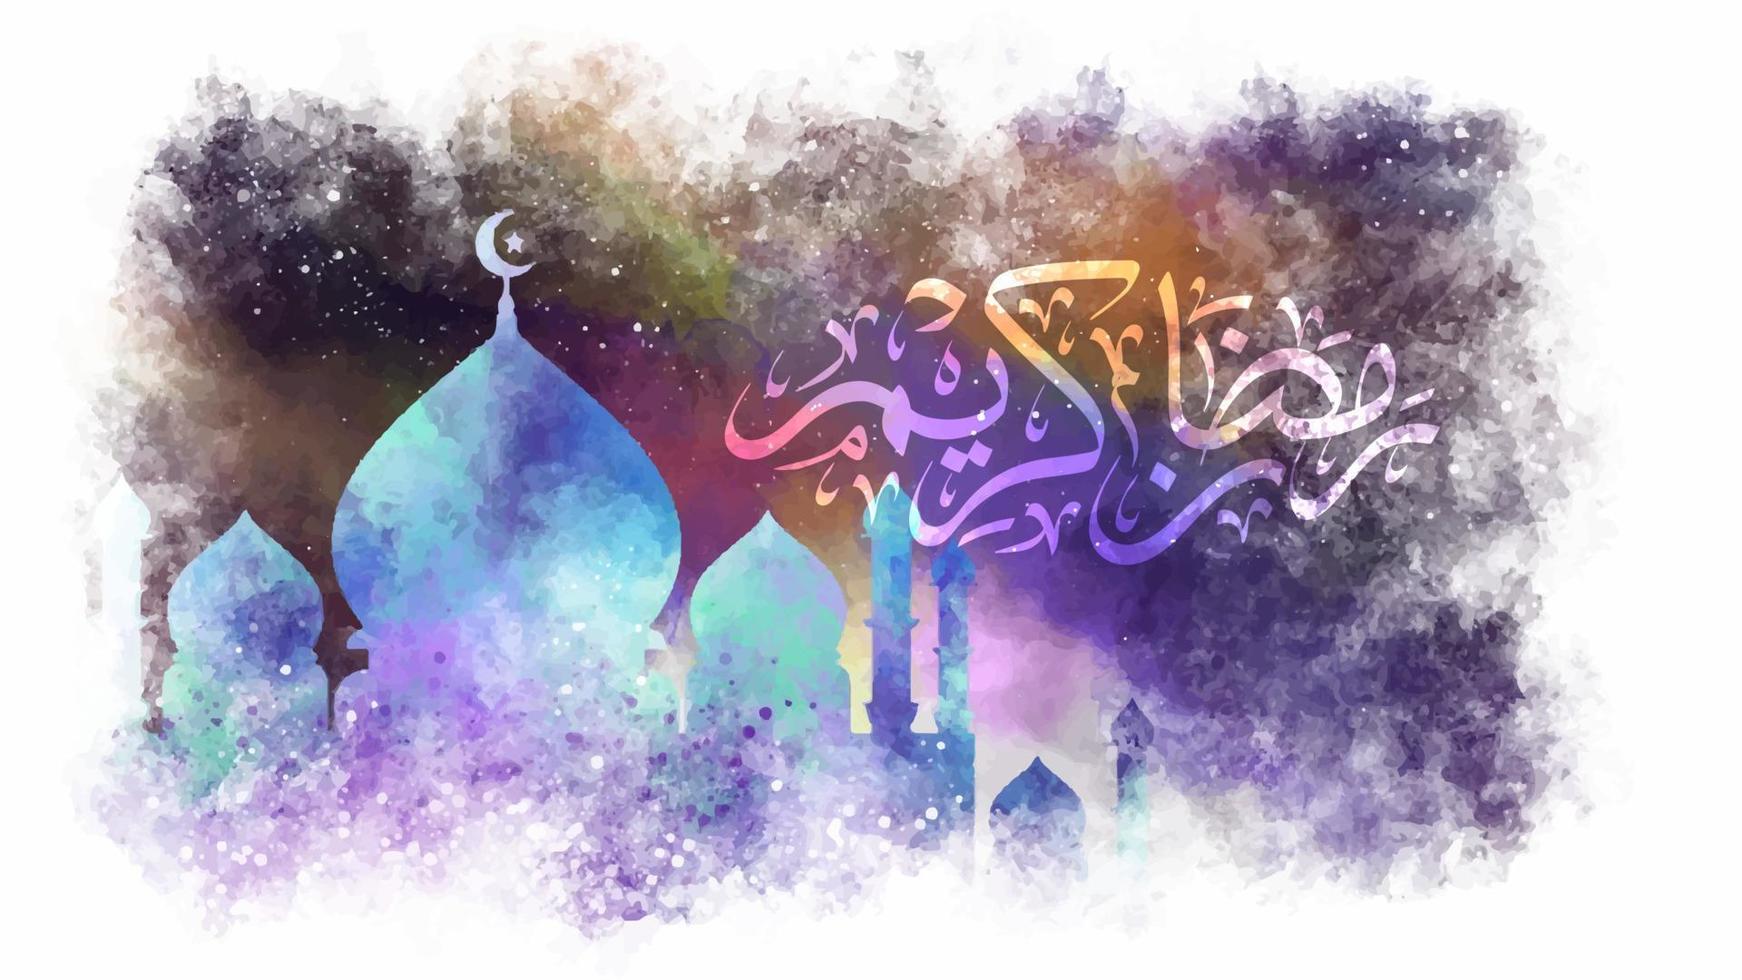 mezquita acuarela abstracta con el texto de ramadan kareem en caligrafía árabe. hermoso fondo de celebración islámica dibujado a mano vector